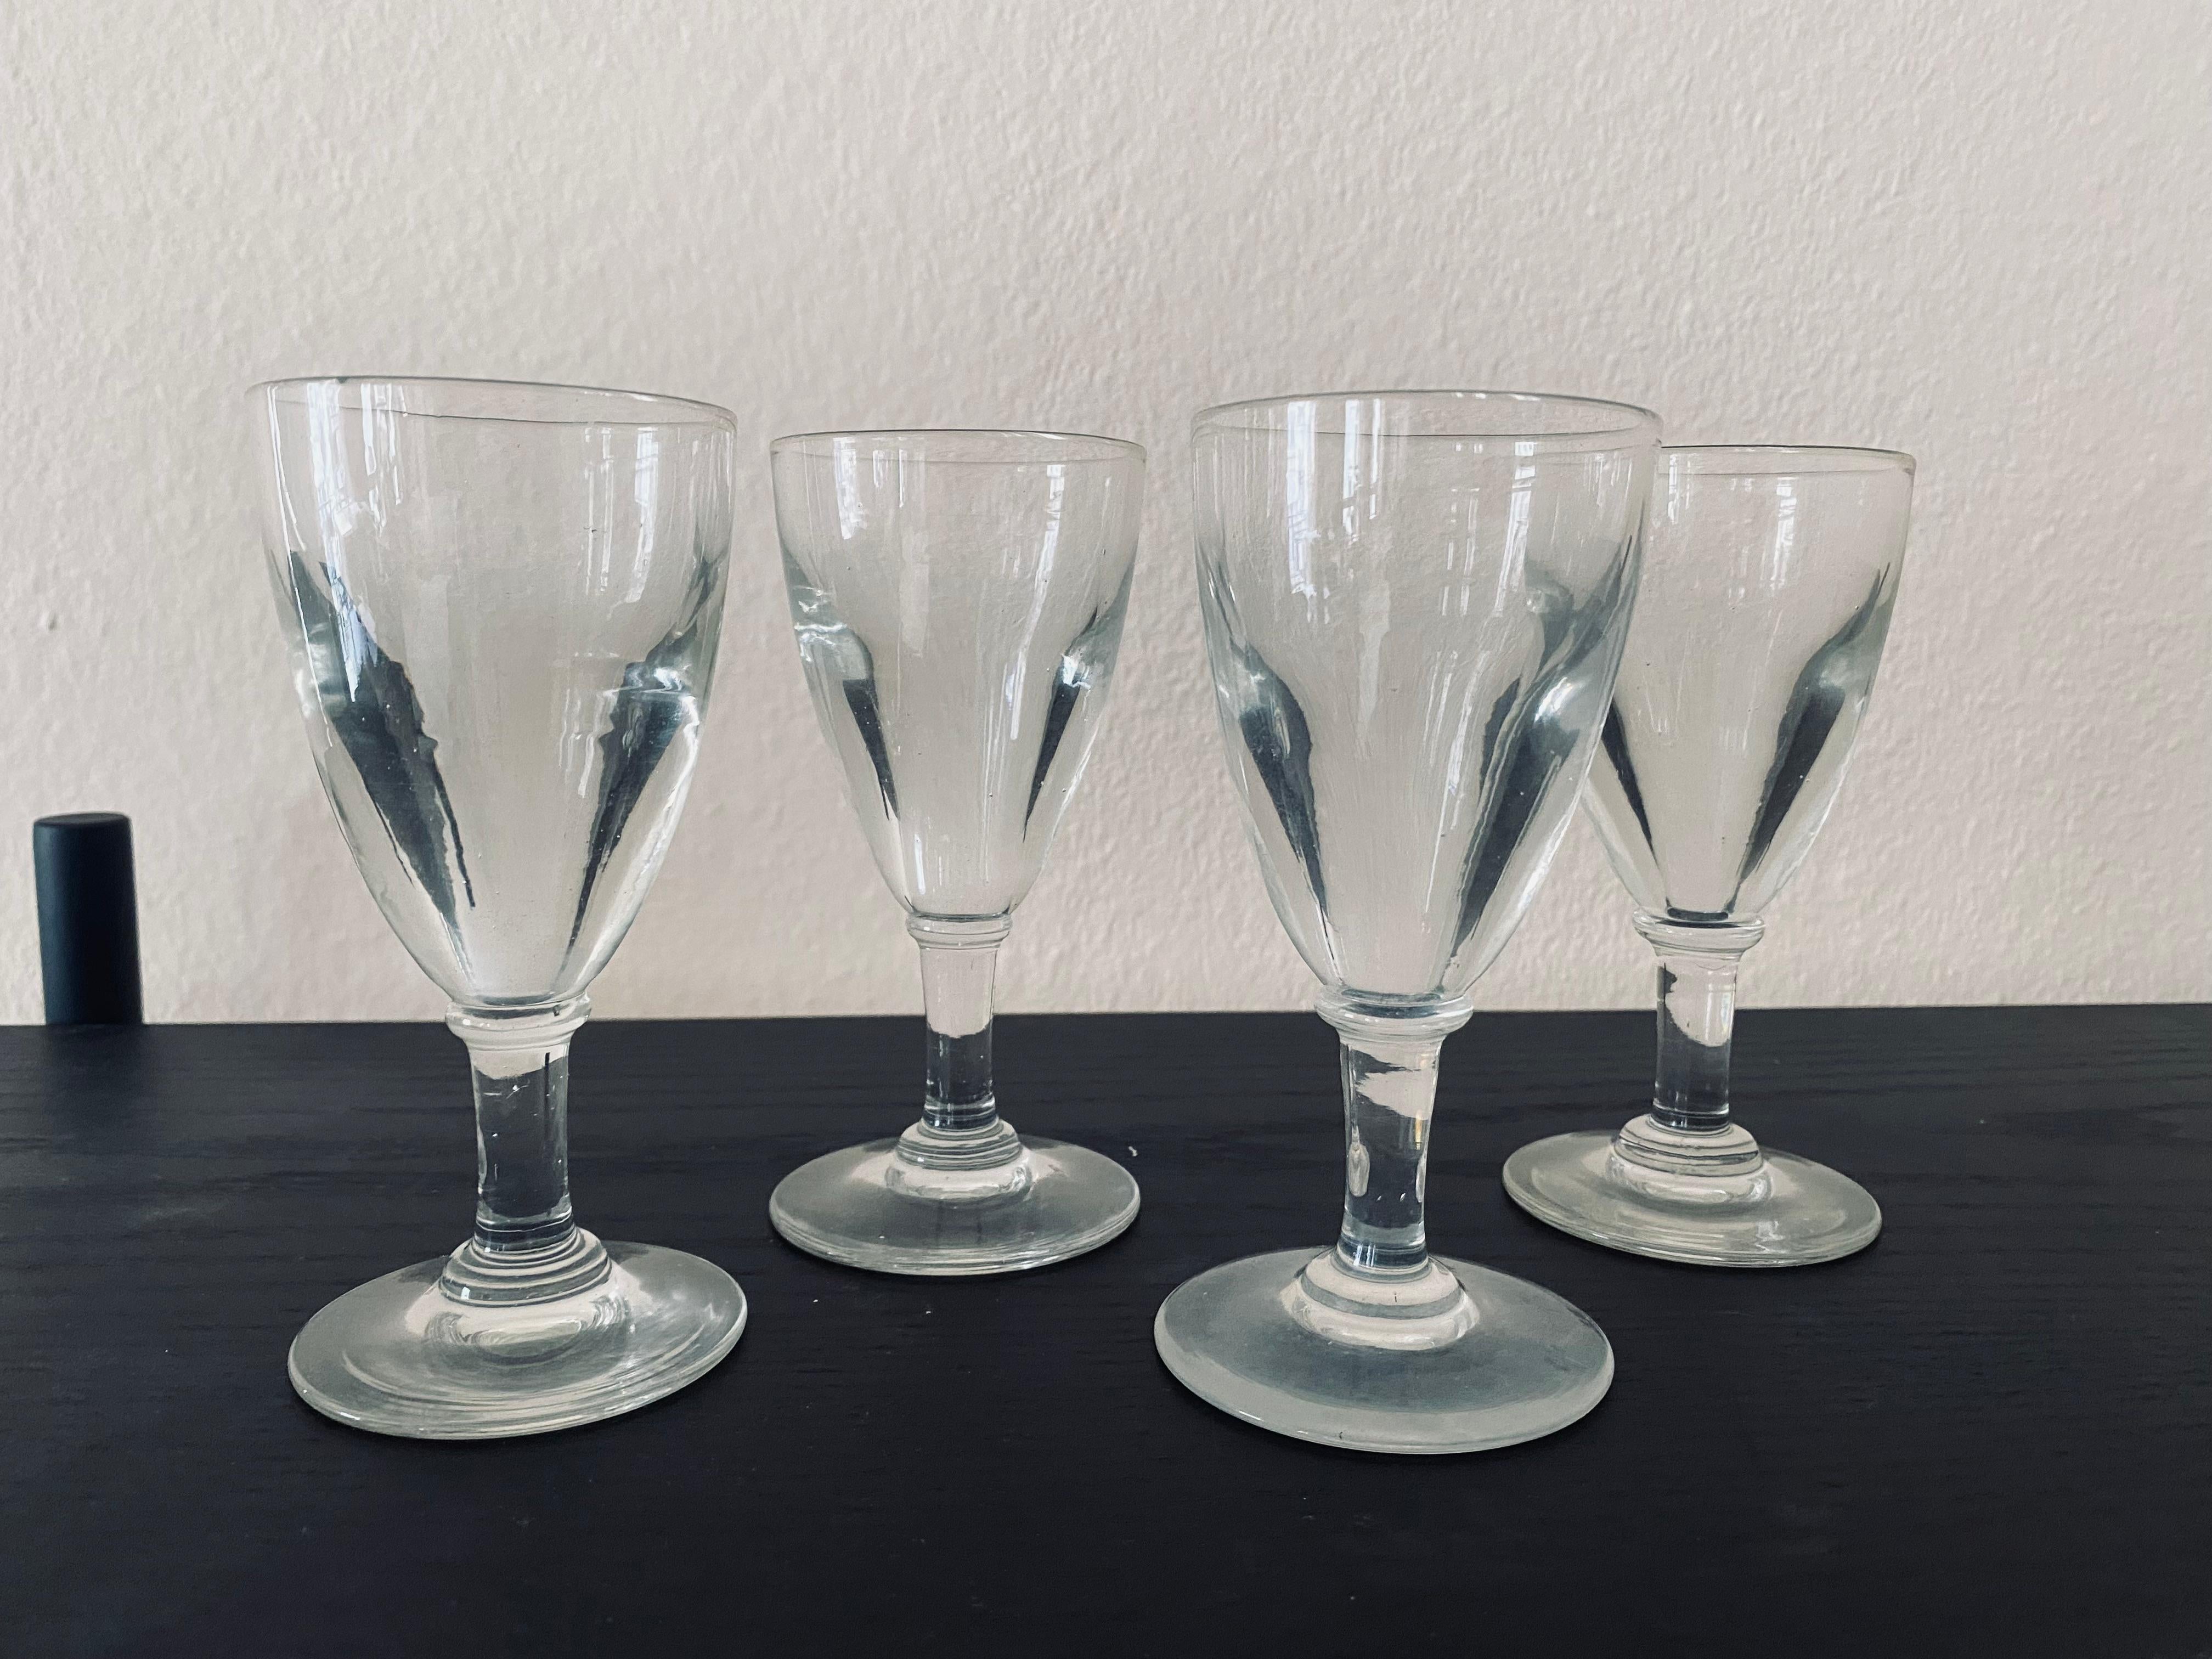 Belle Époque Vintage Pasties Glasses from 1900 France: Timeless Elegance in Antique Glassware For Sale